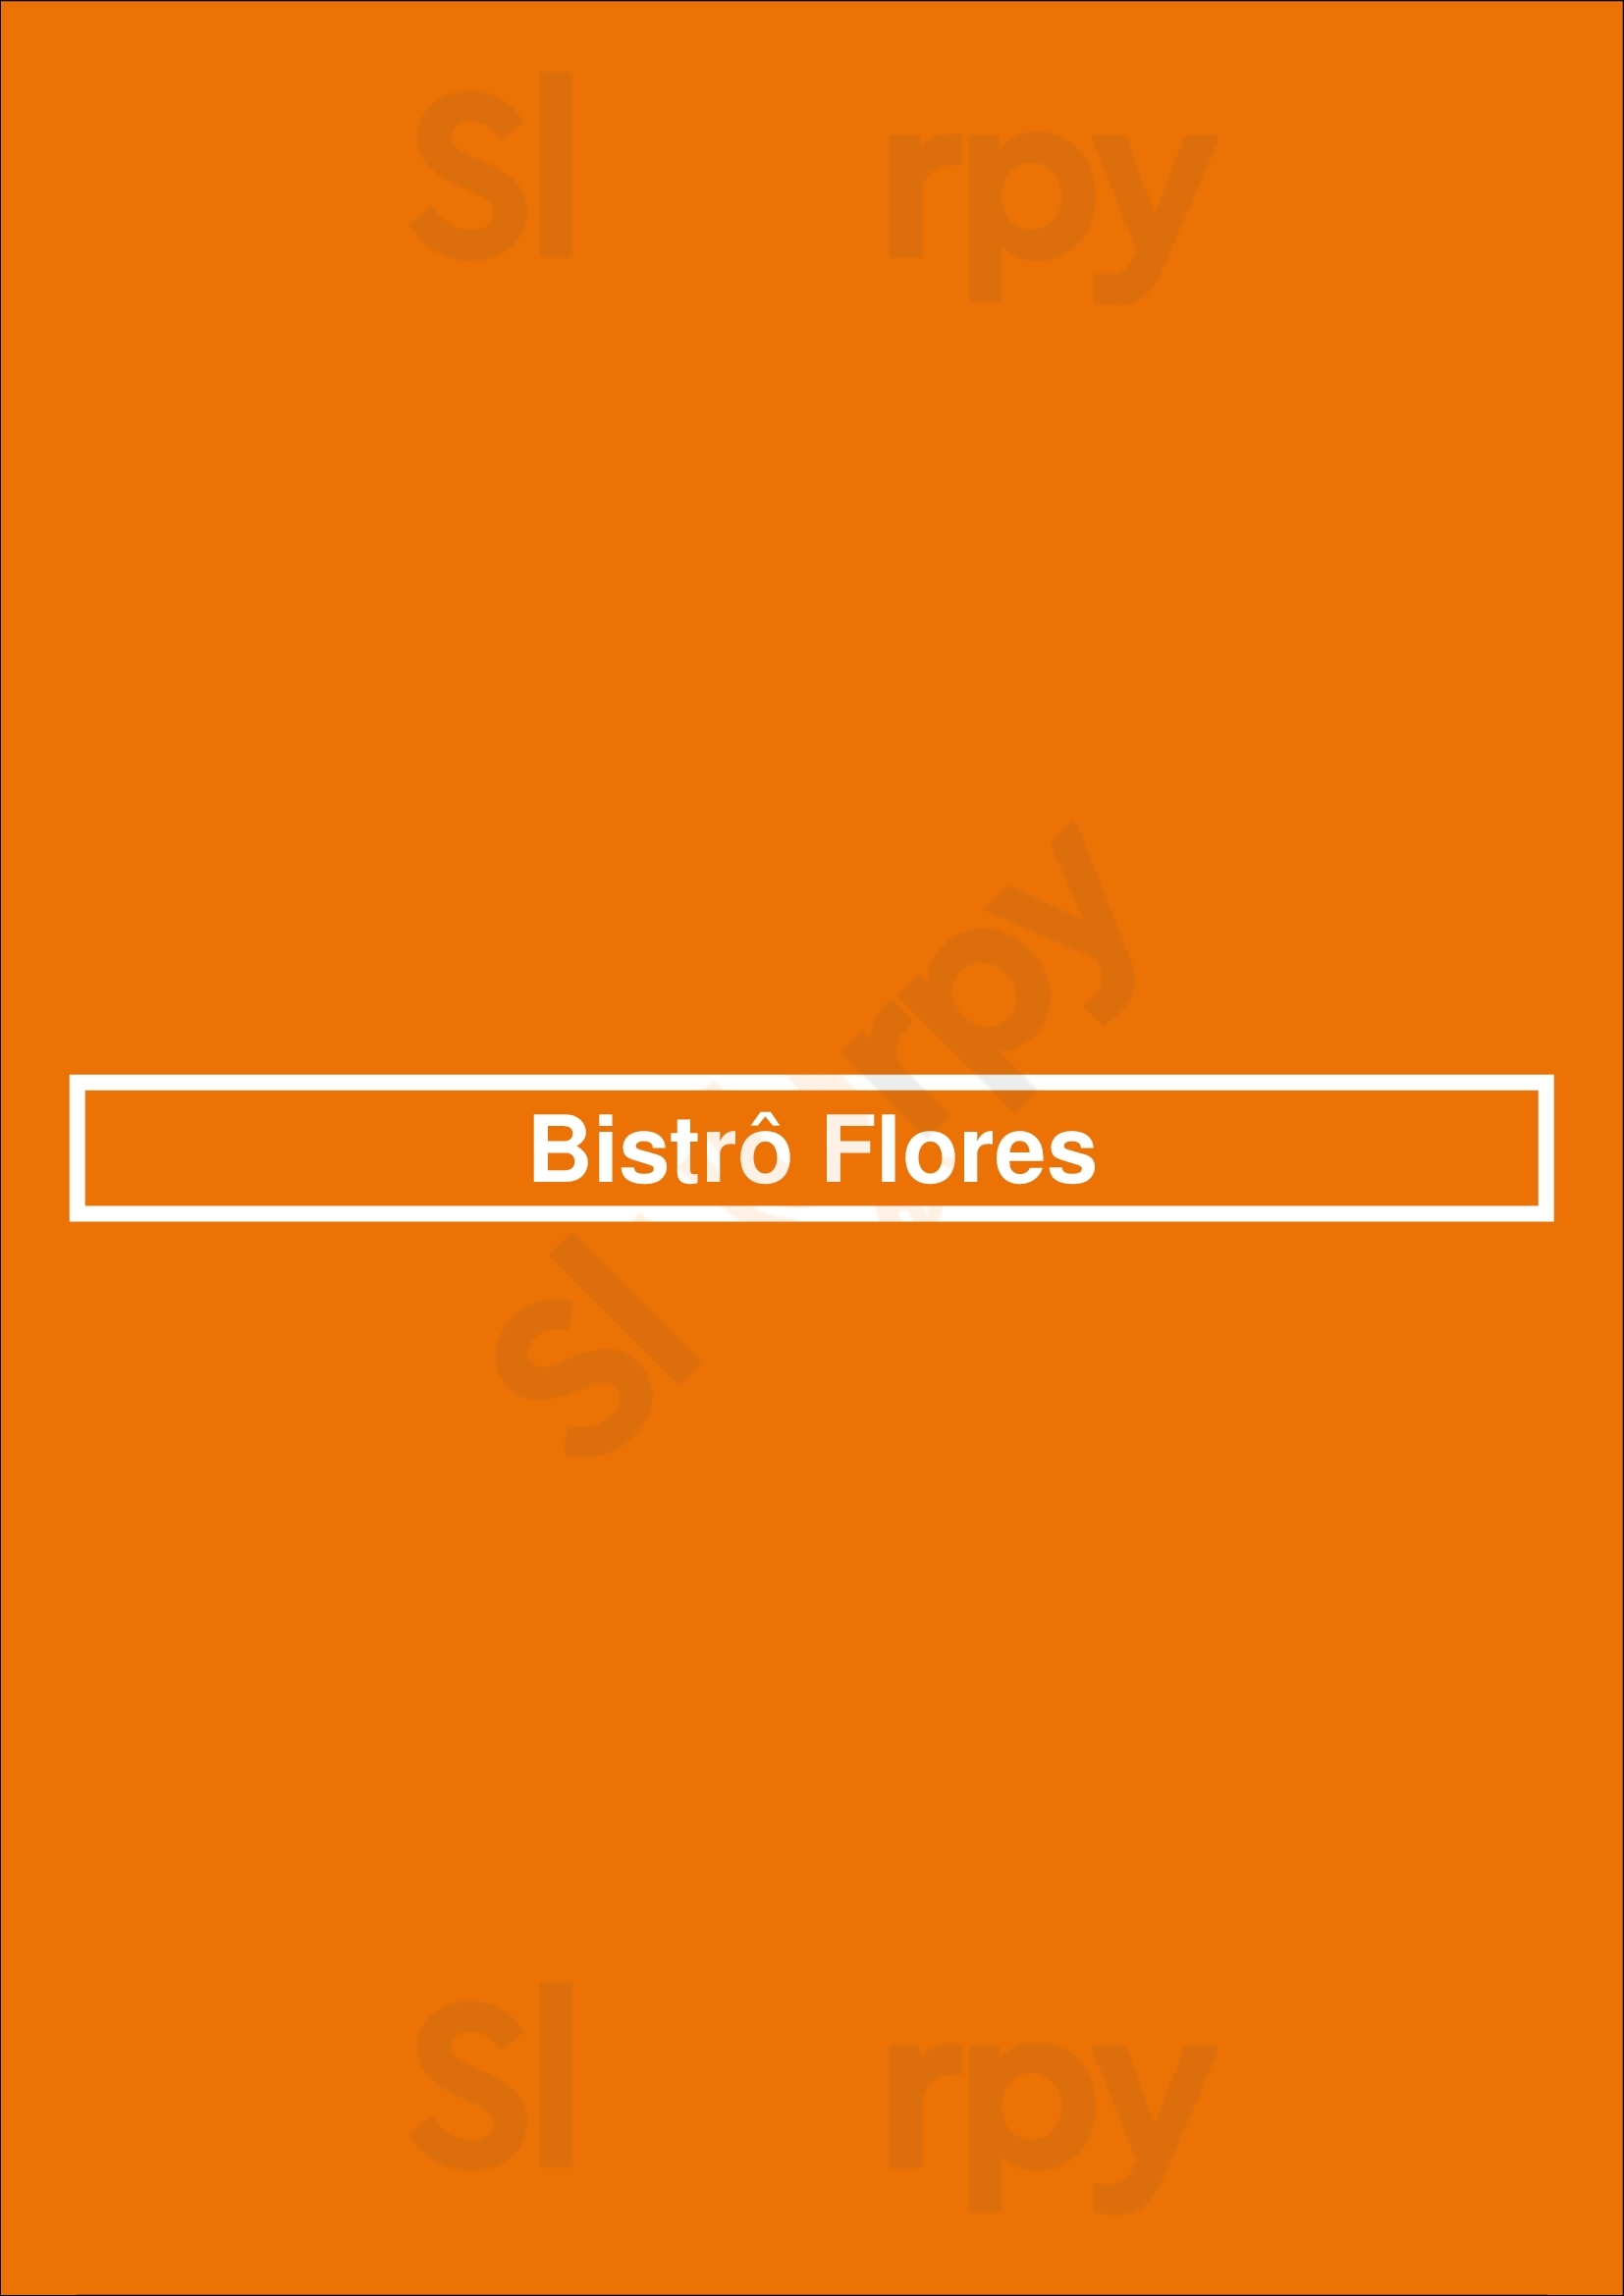 Bistrô Flores Porto Menu - 1